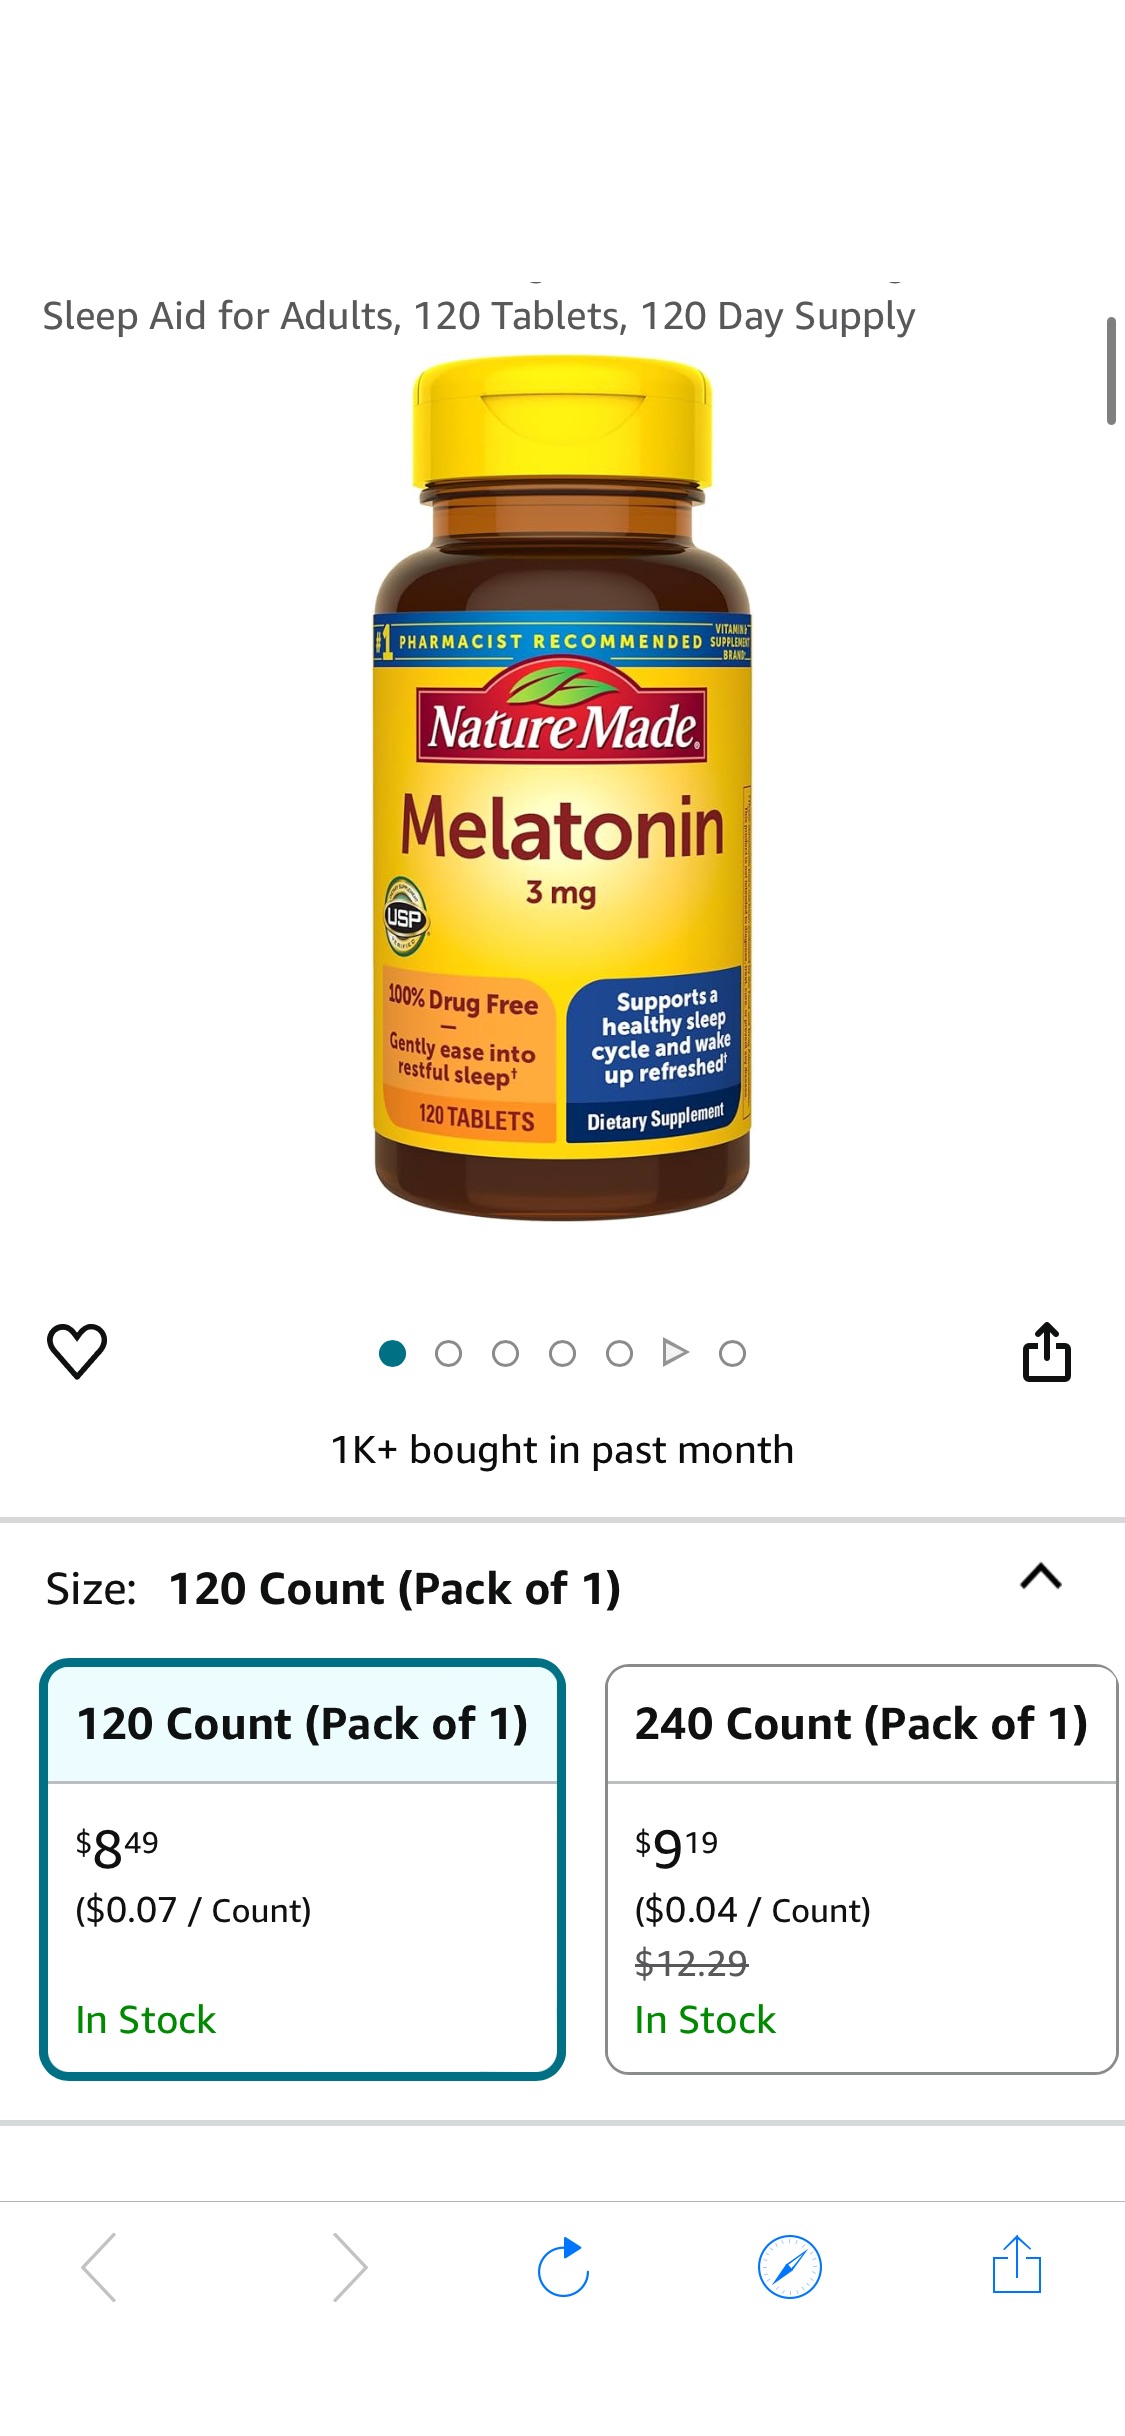 Amazon.com: Nature Made Melatonin 3mg Tablets, 100% Drug Free Sleep Aid for Adults, 120 Tablets, 120 Day Supply : Health & Household